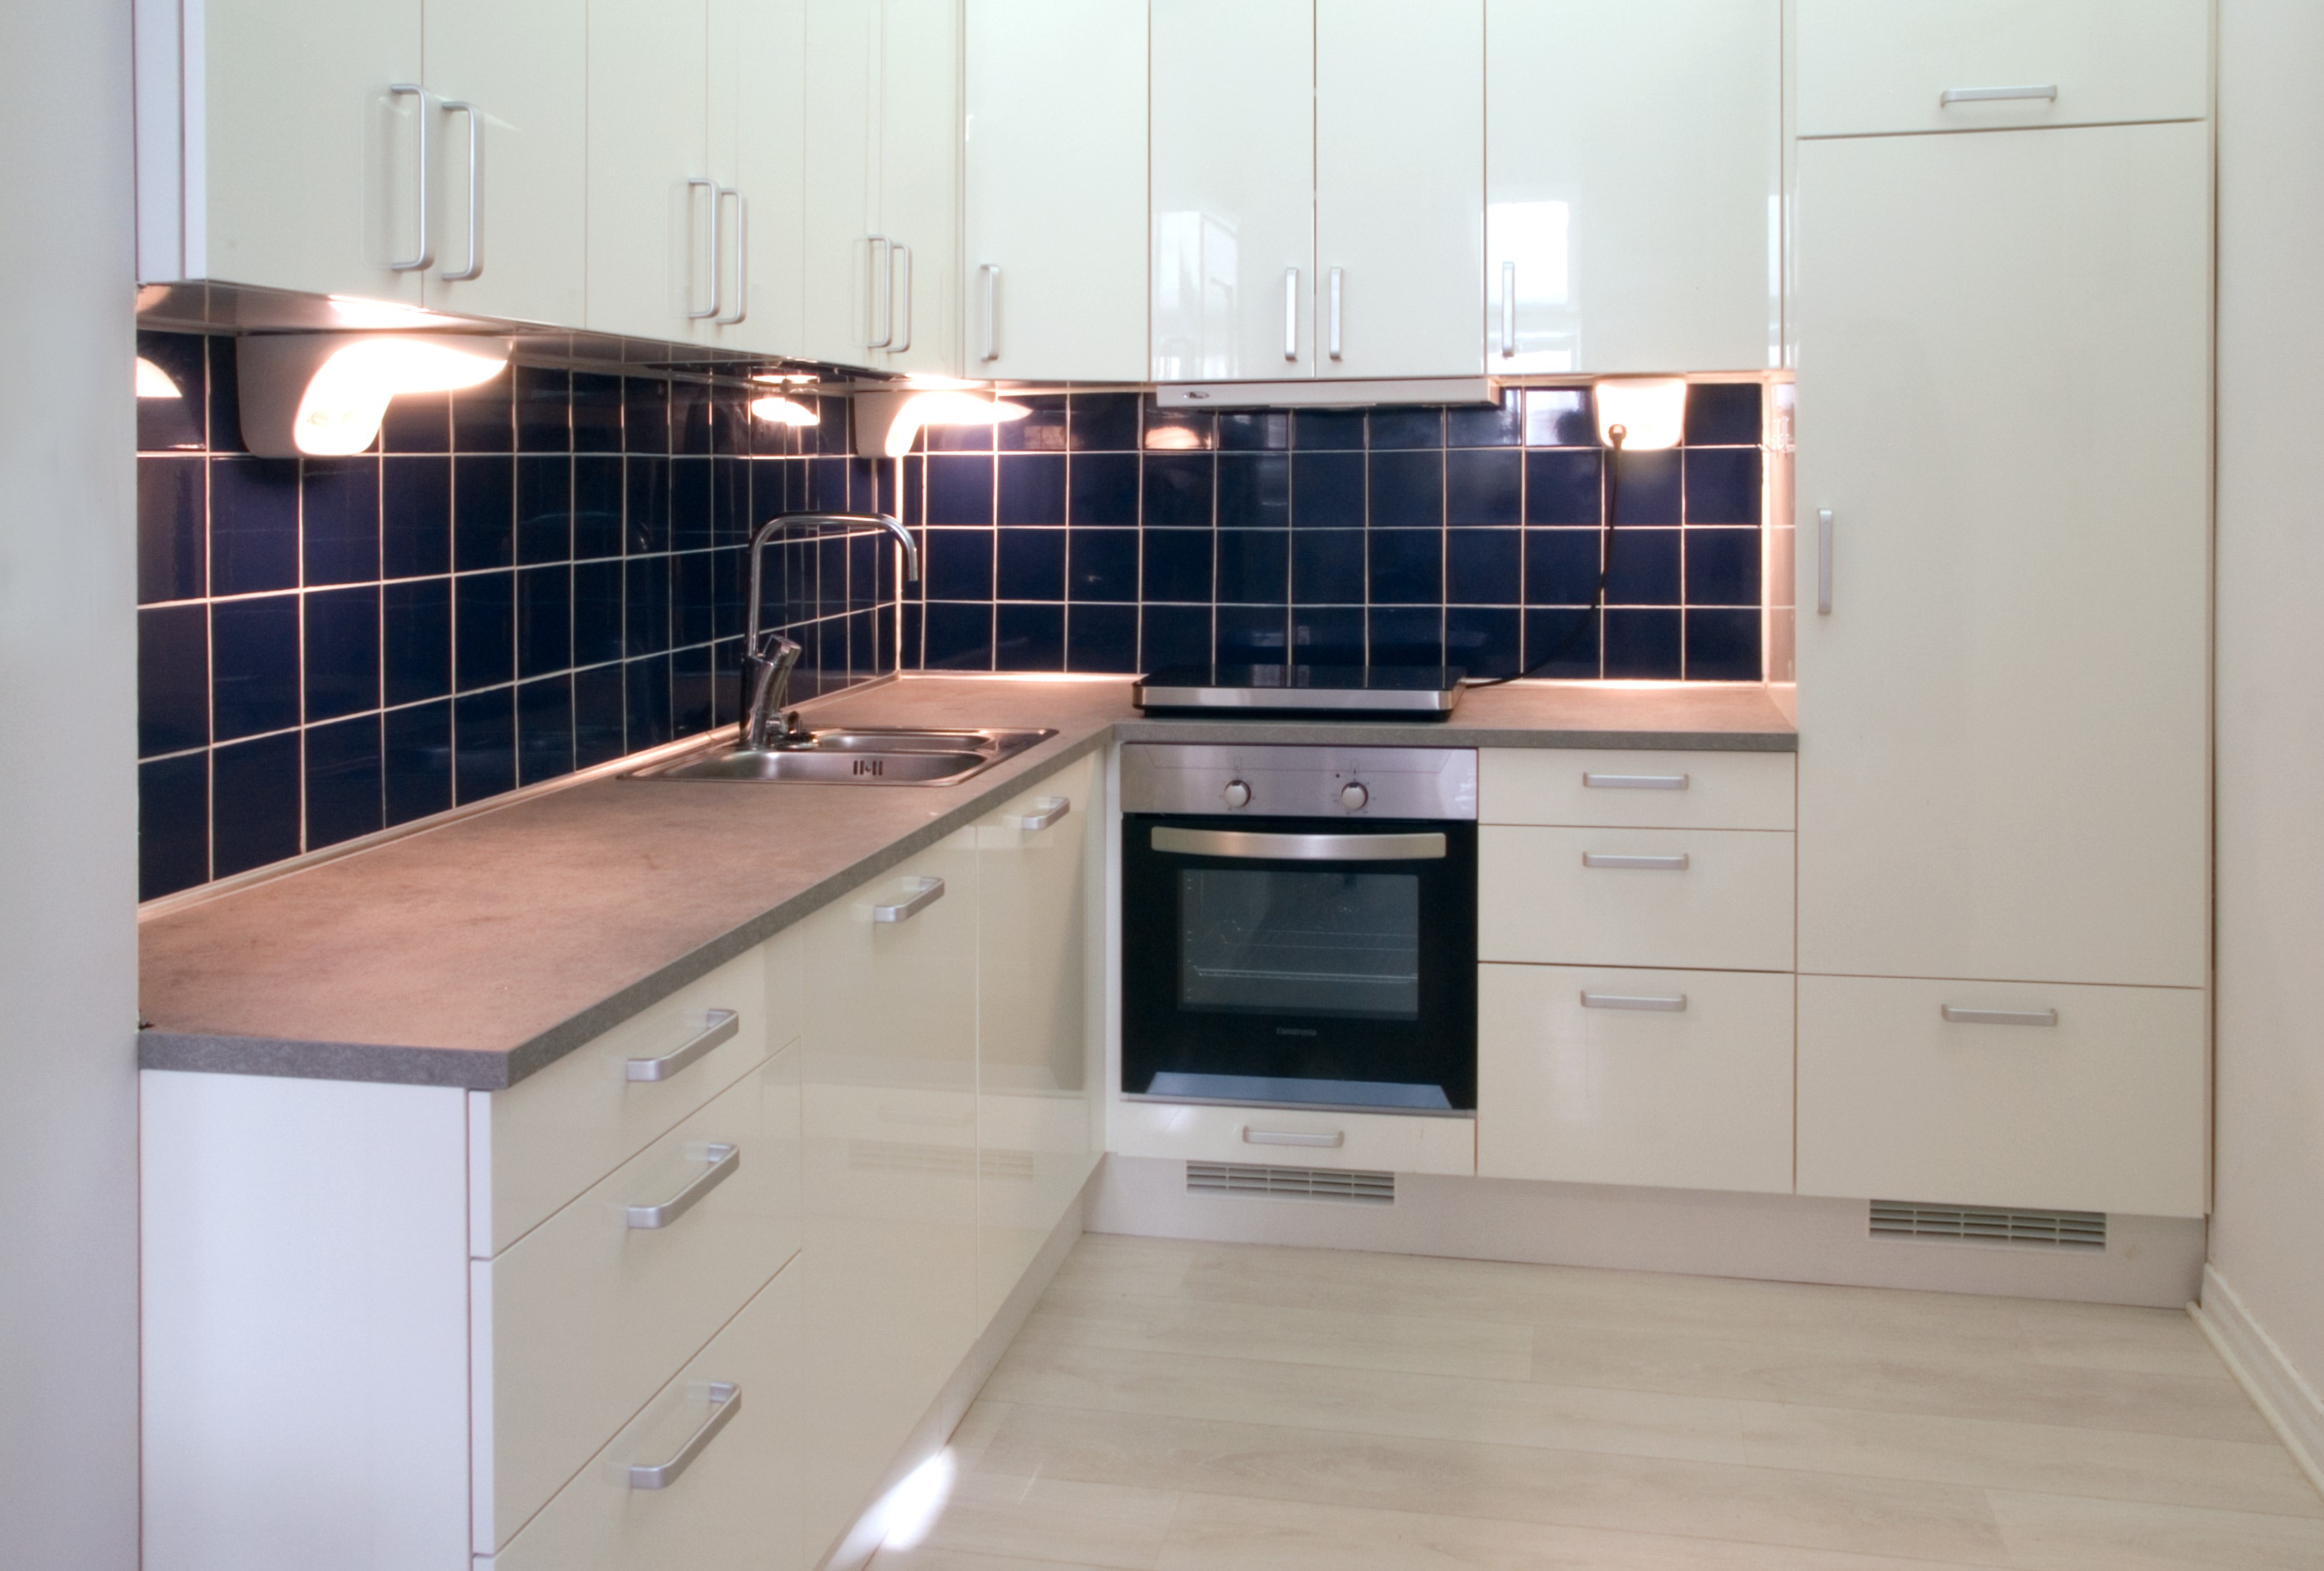 Modern kitchen – white colored tiles